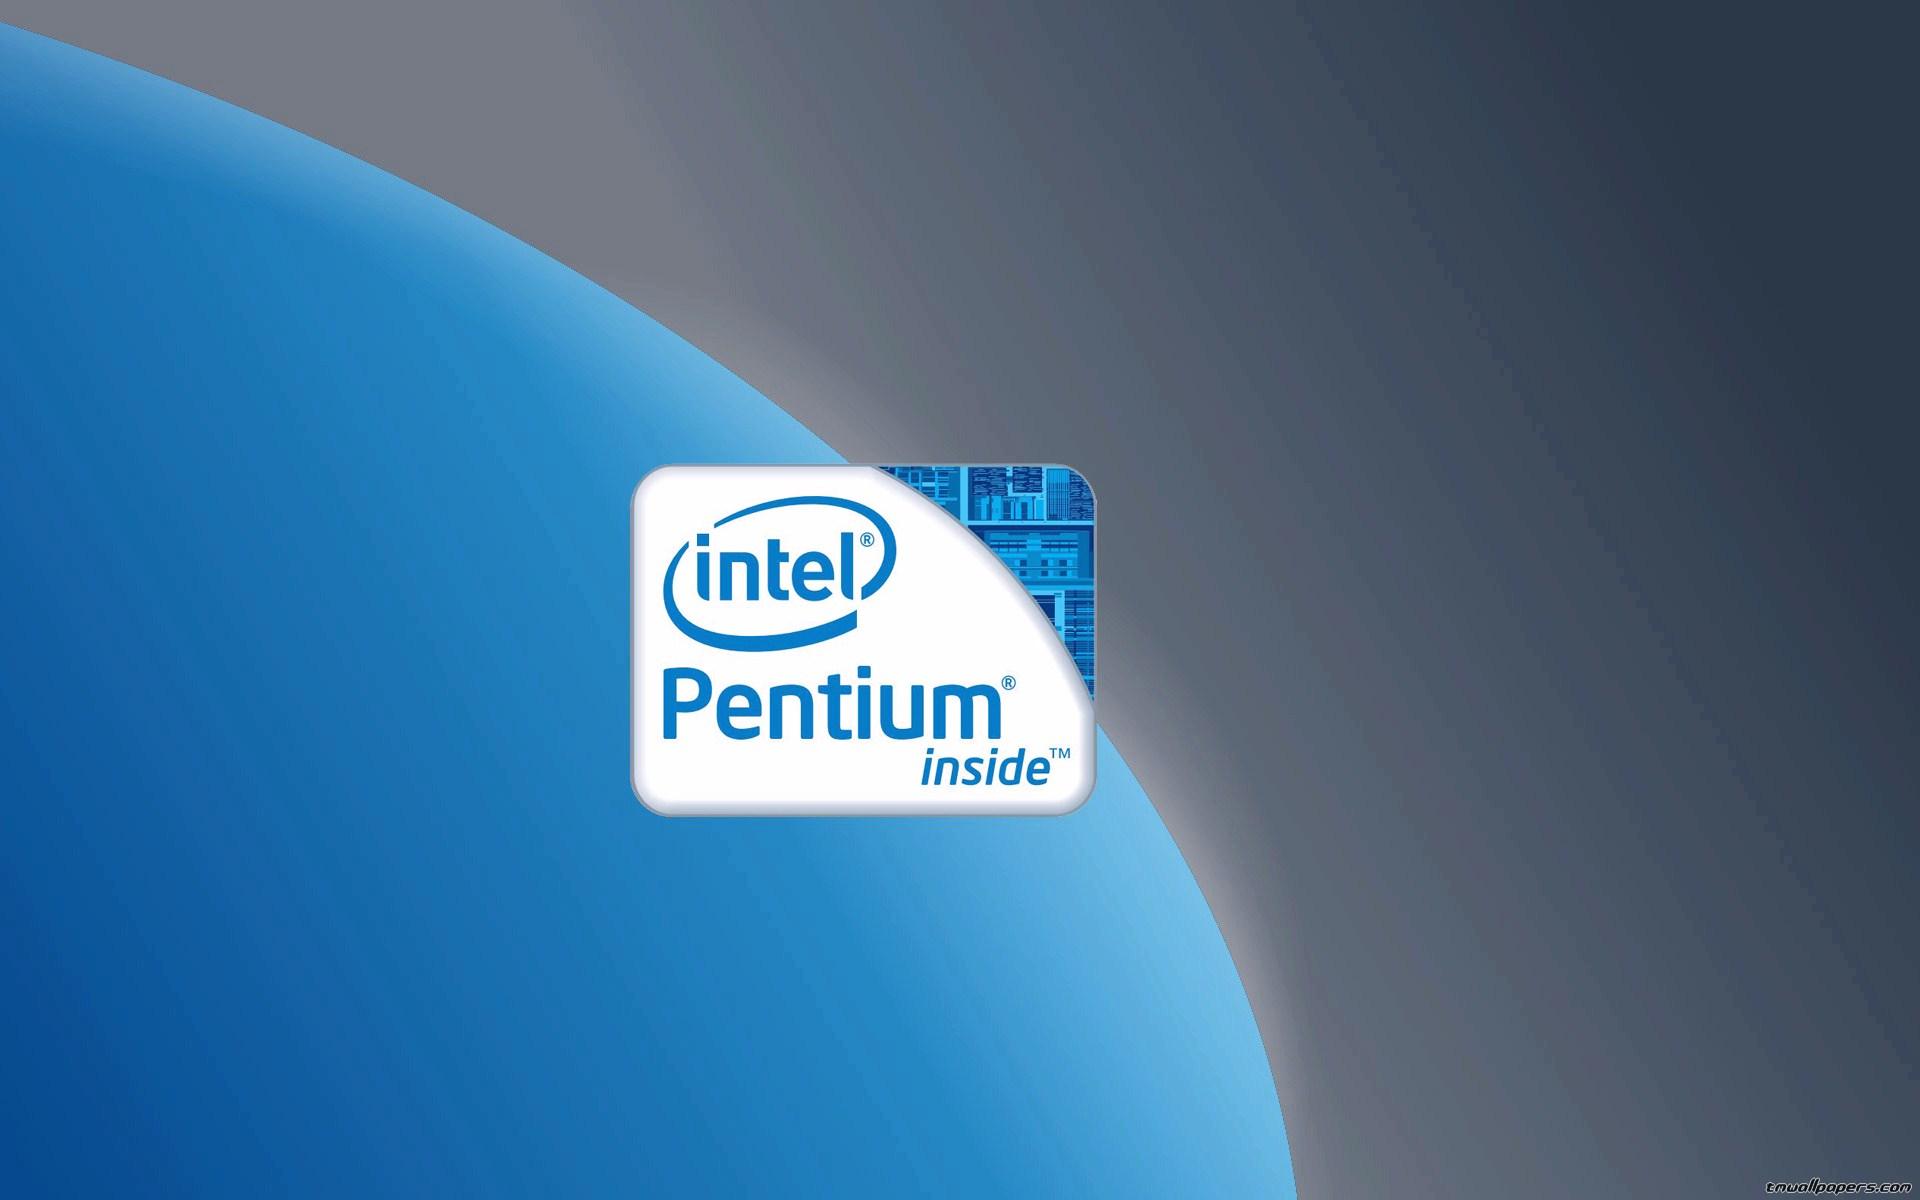 Intel оф сайт. Интел. Интел пентиум инсайд. Intel Pentium inside. Логотип Intel inside.